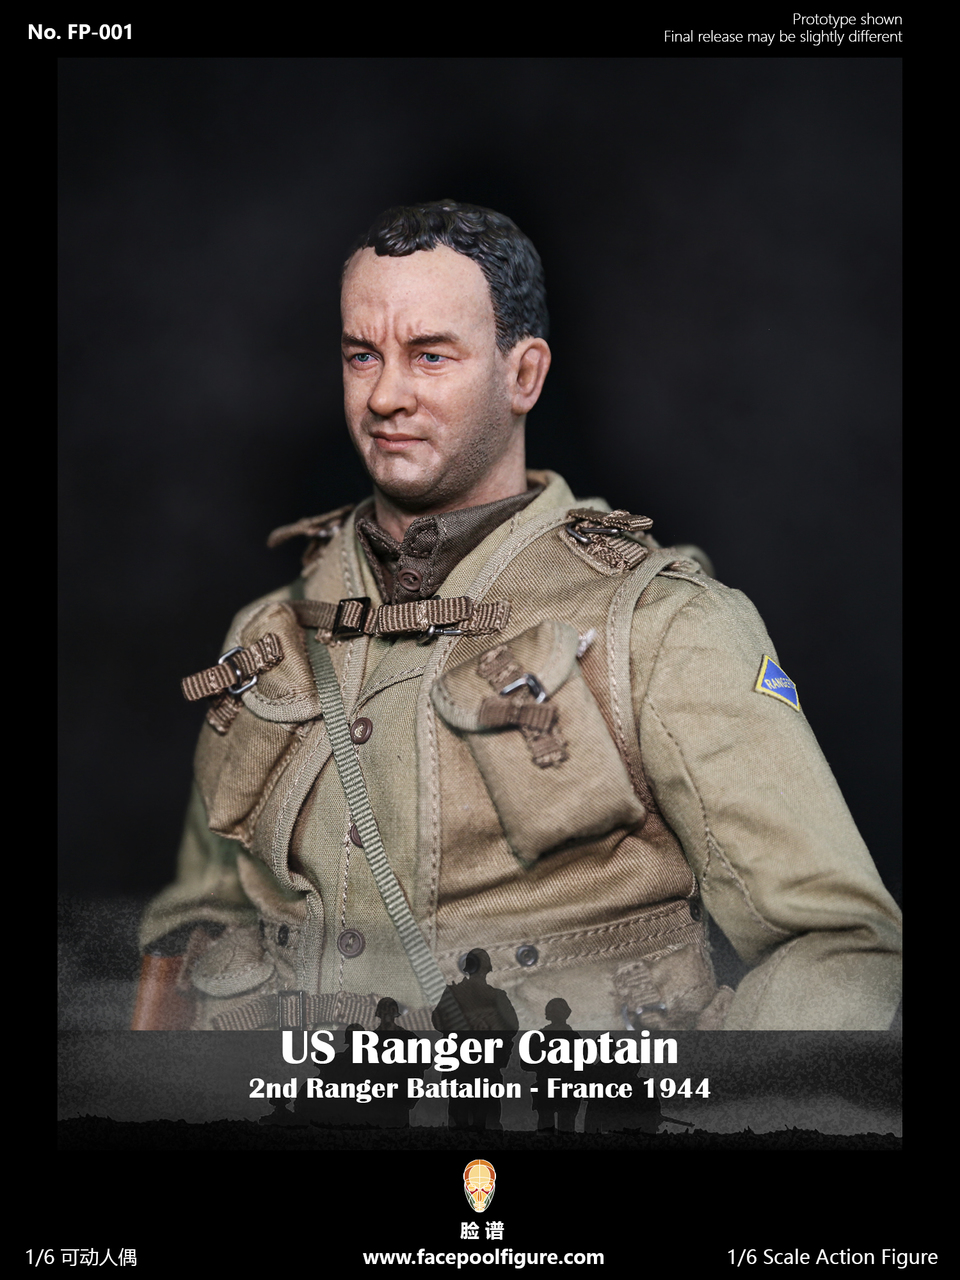 Details about   Reiben 2nd Ranger DID Action Figures Life Belt # 2-1/6 Scale